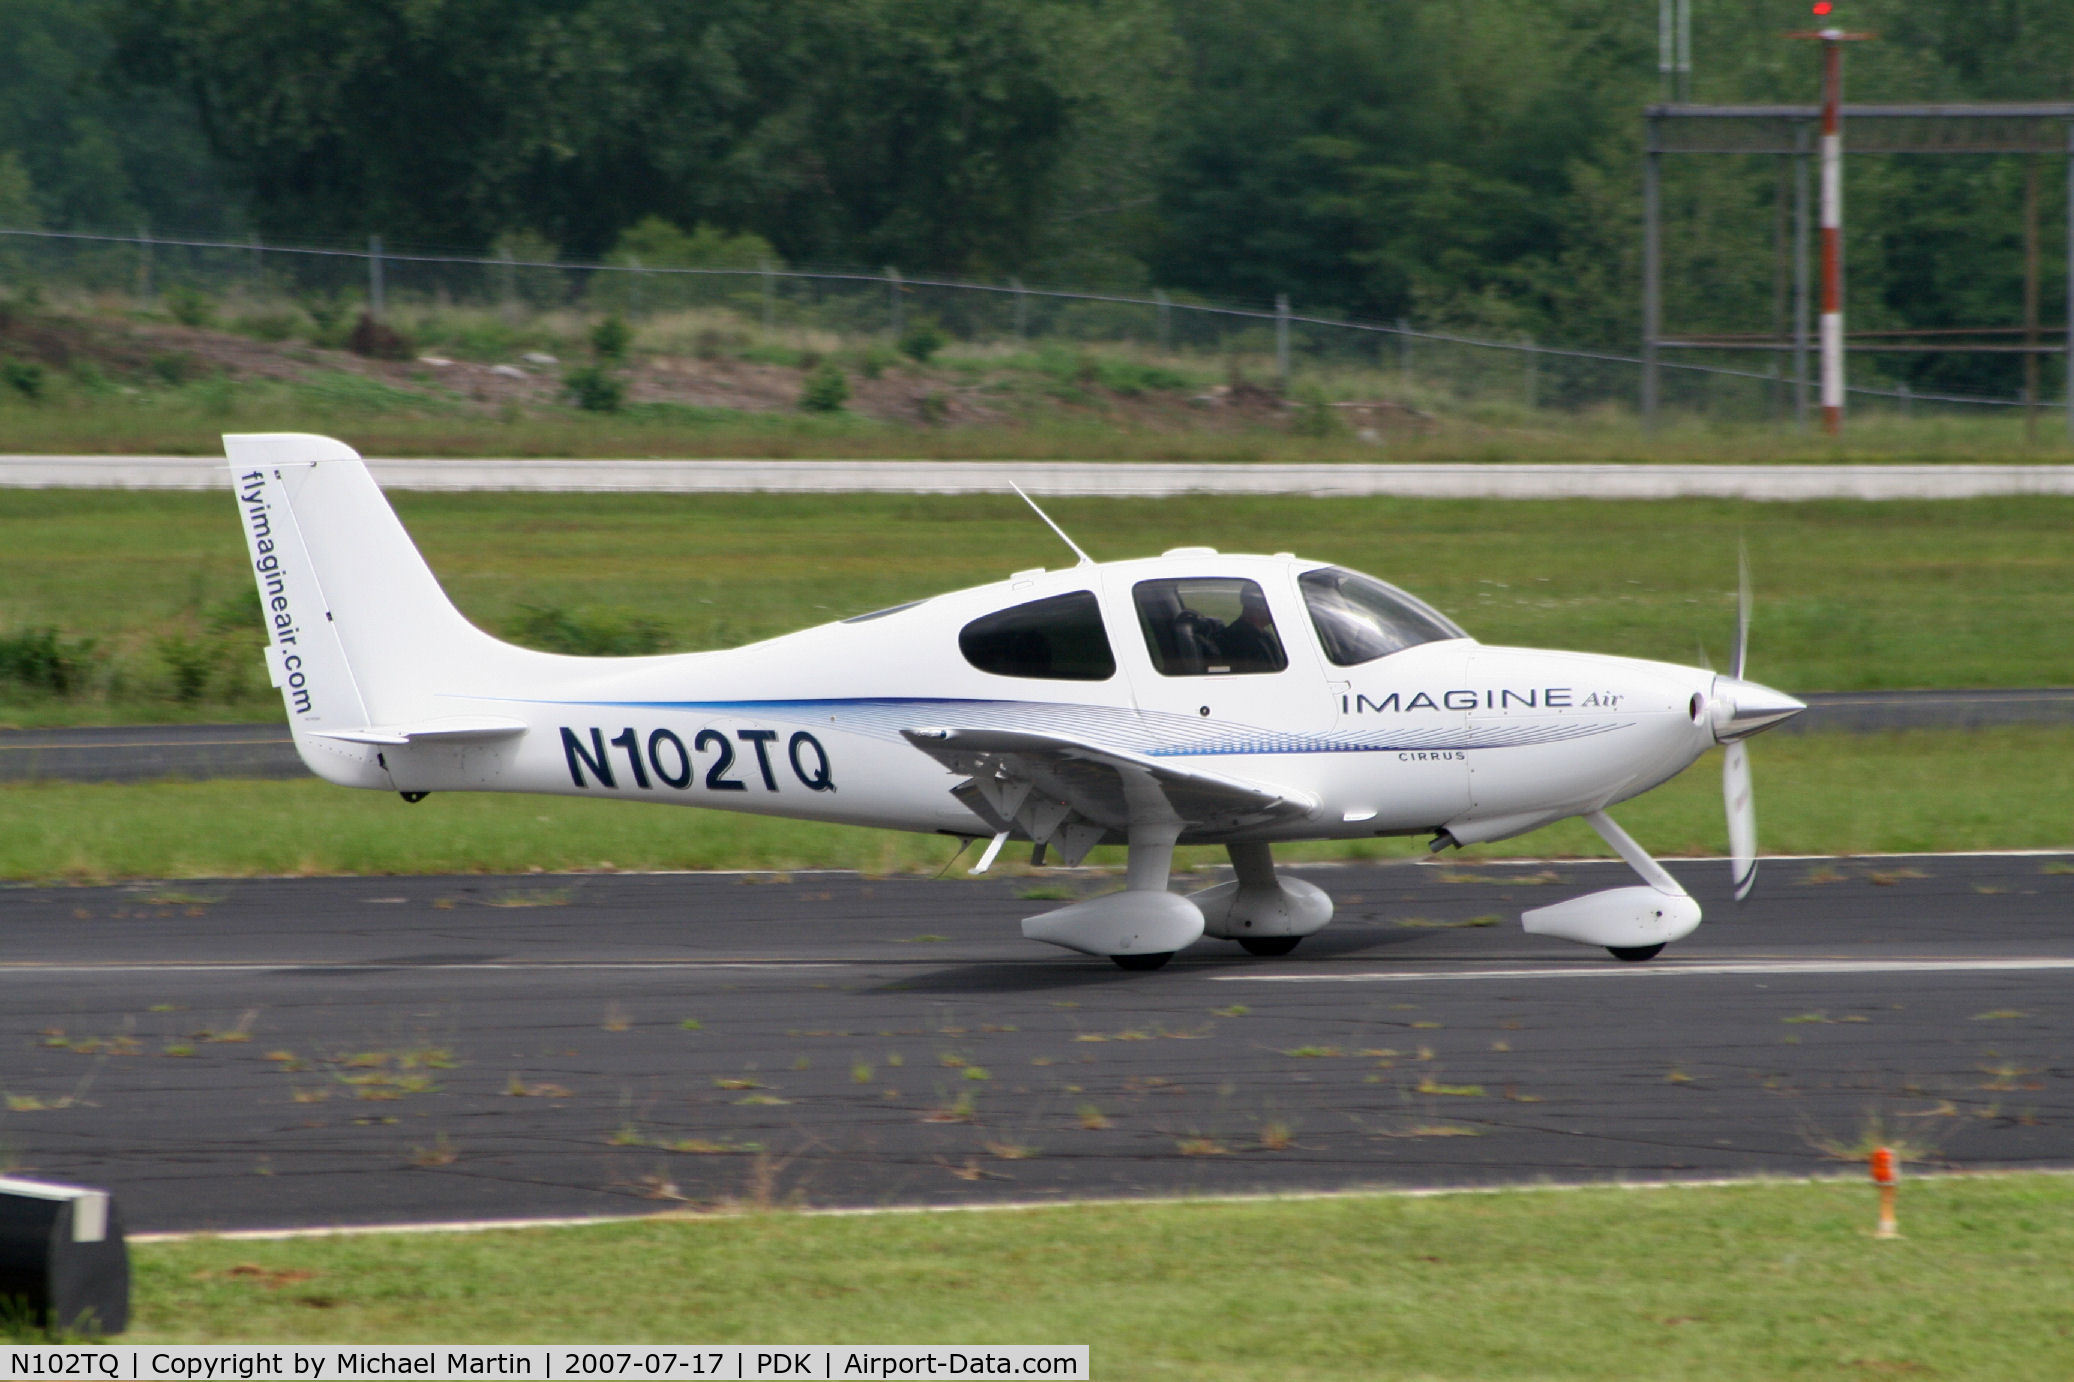 N102TQ, 2006 Cirrus SR22 C/N 2018, Taking off from Runway 20R